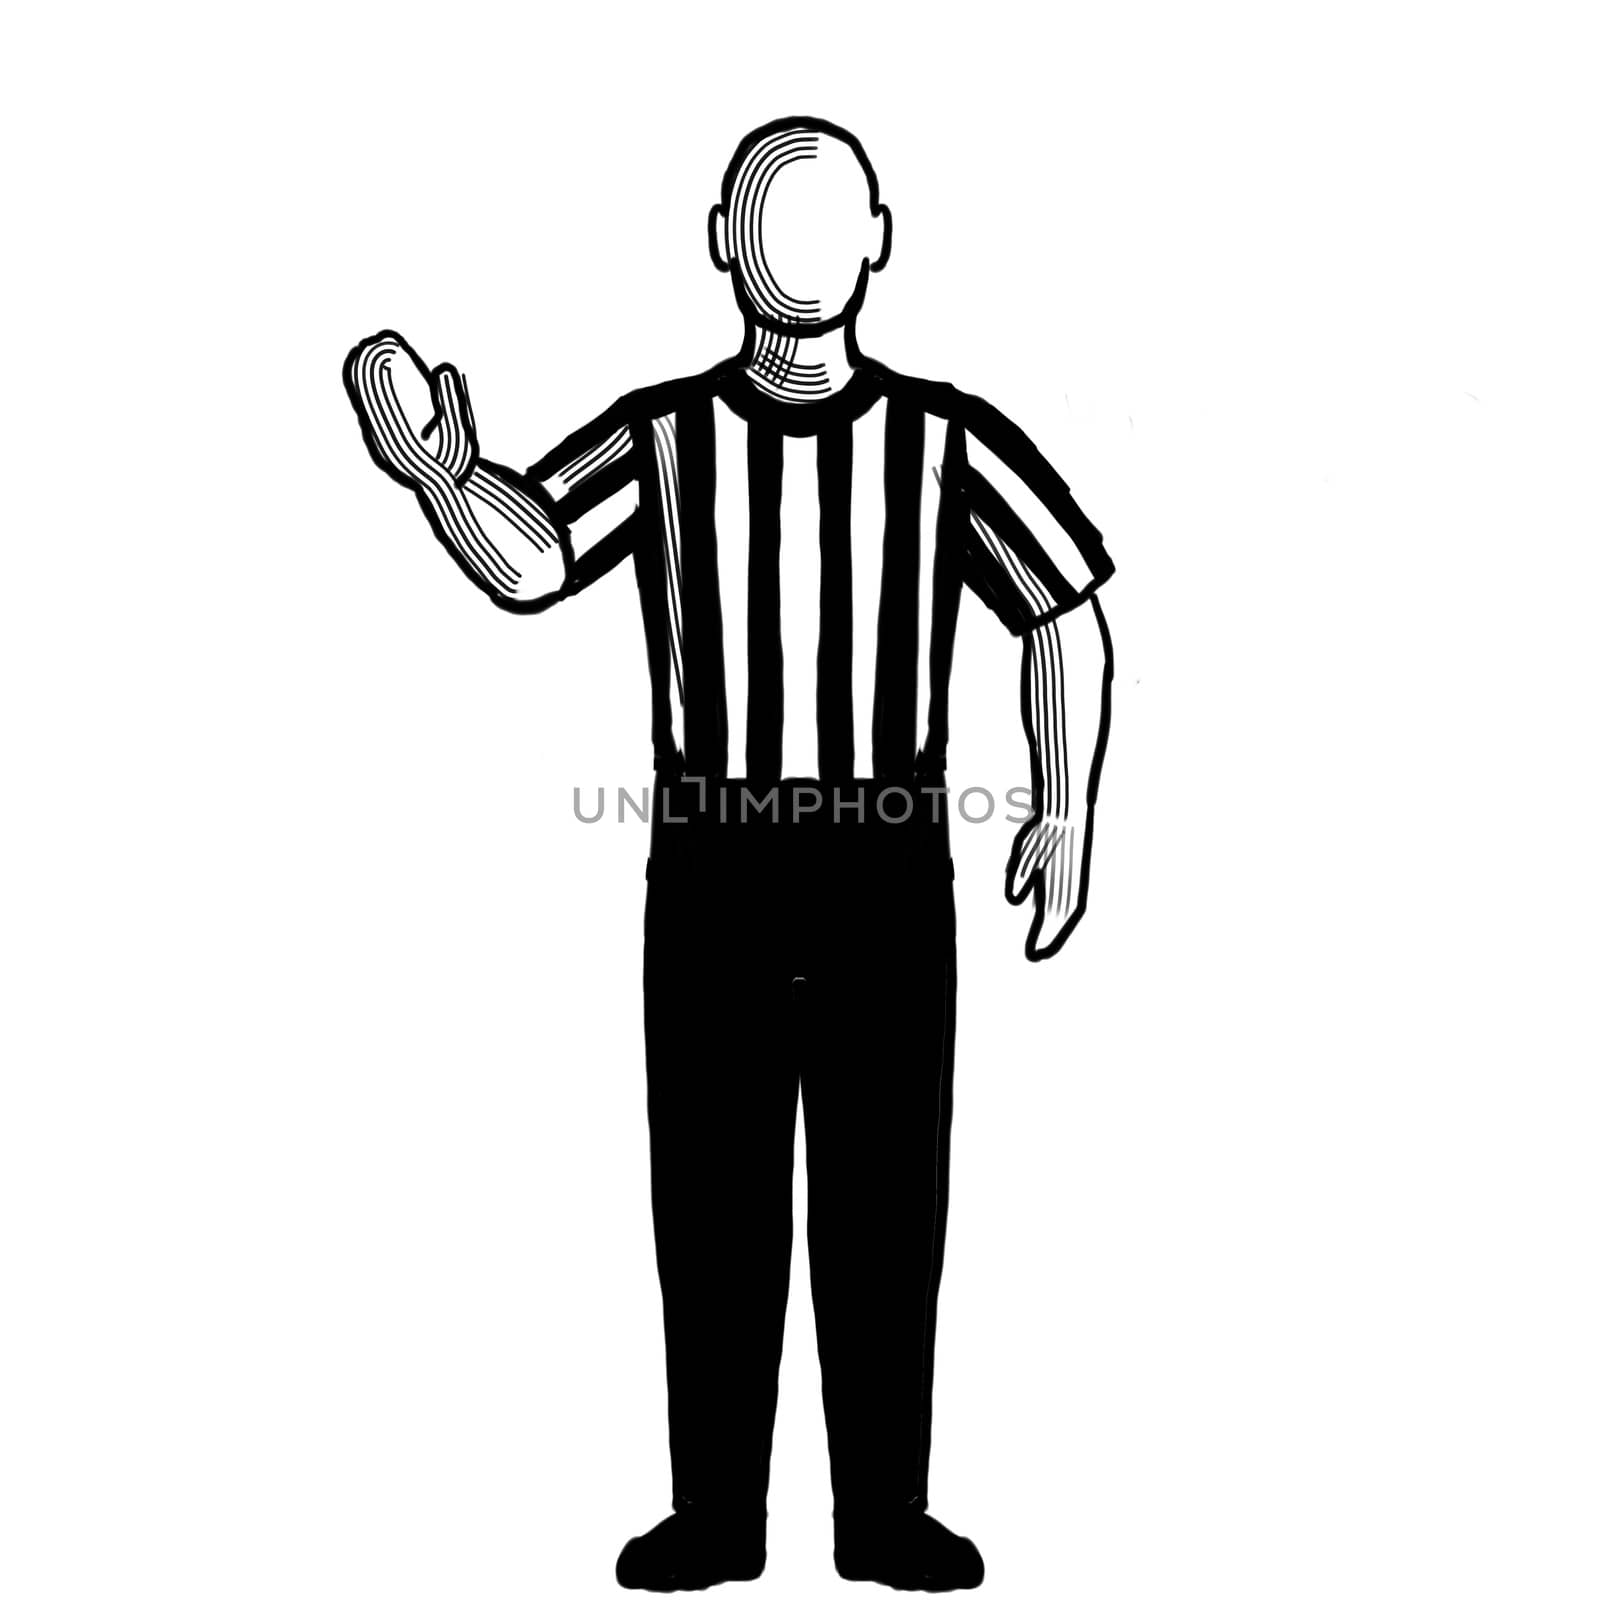 Basketball Referee 5-second violation Hand Signal Retro Black and White by patrimonio